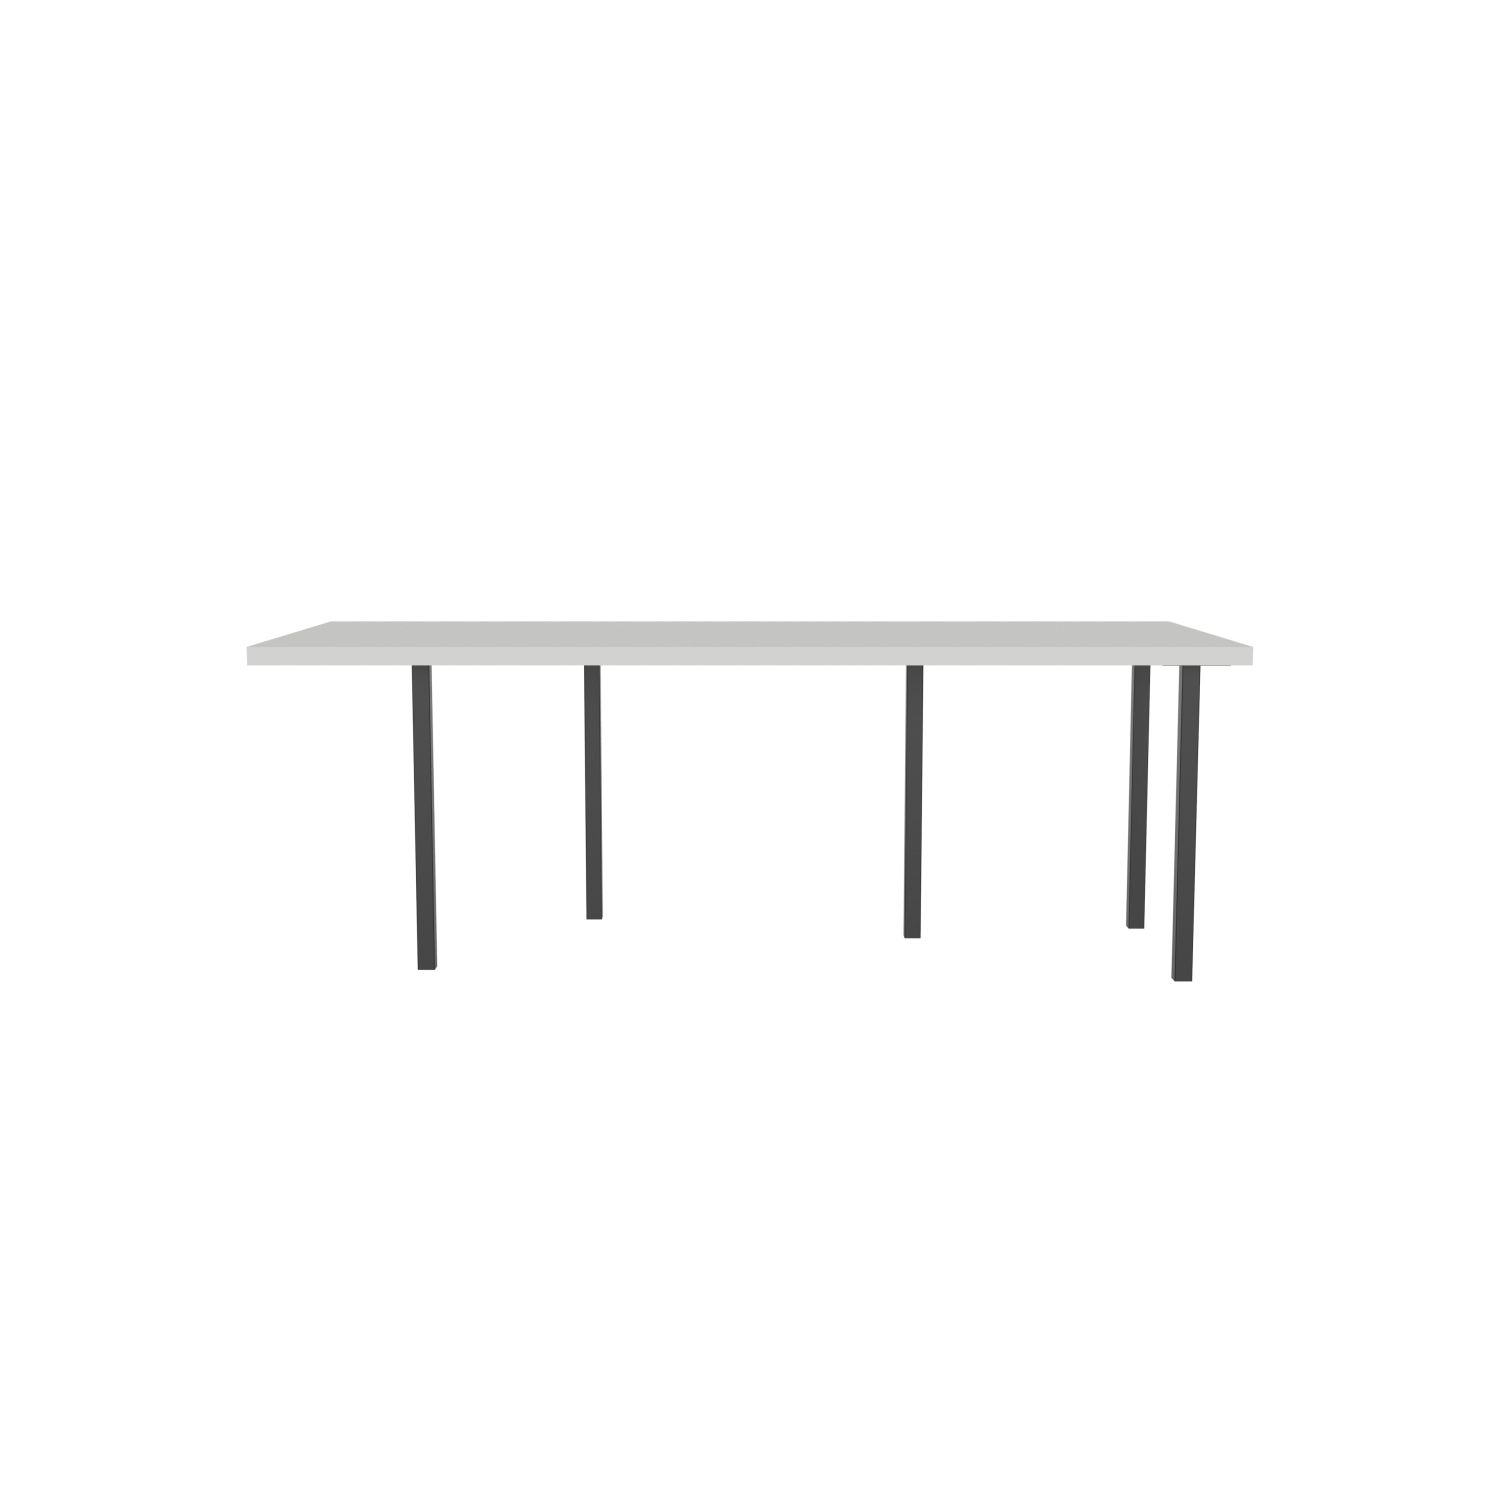 lensvelt bbrand table five fixed heigt 915x218 hpl boring grey 50 mm price level 1 black ral9005